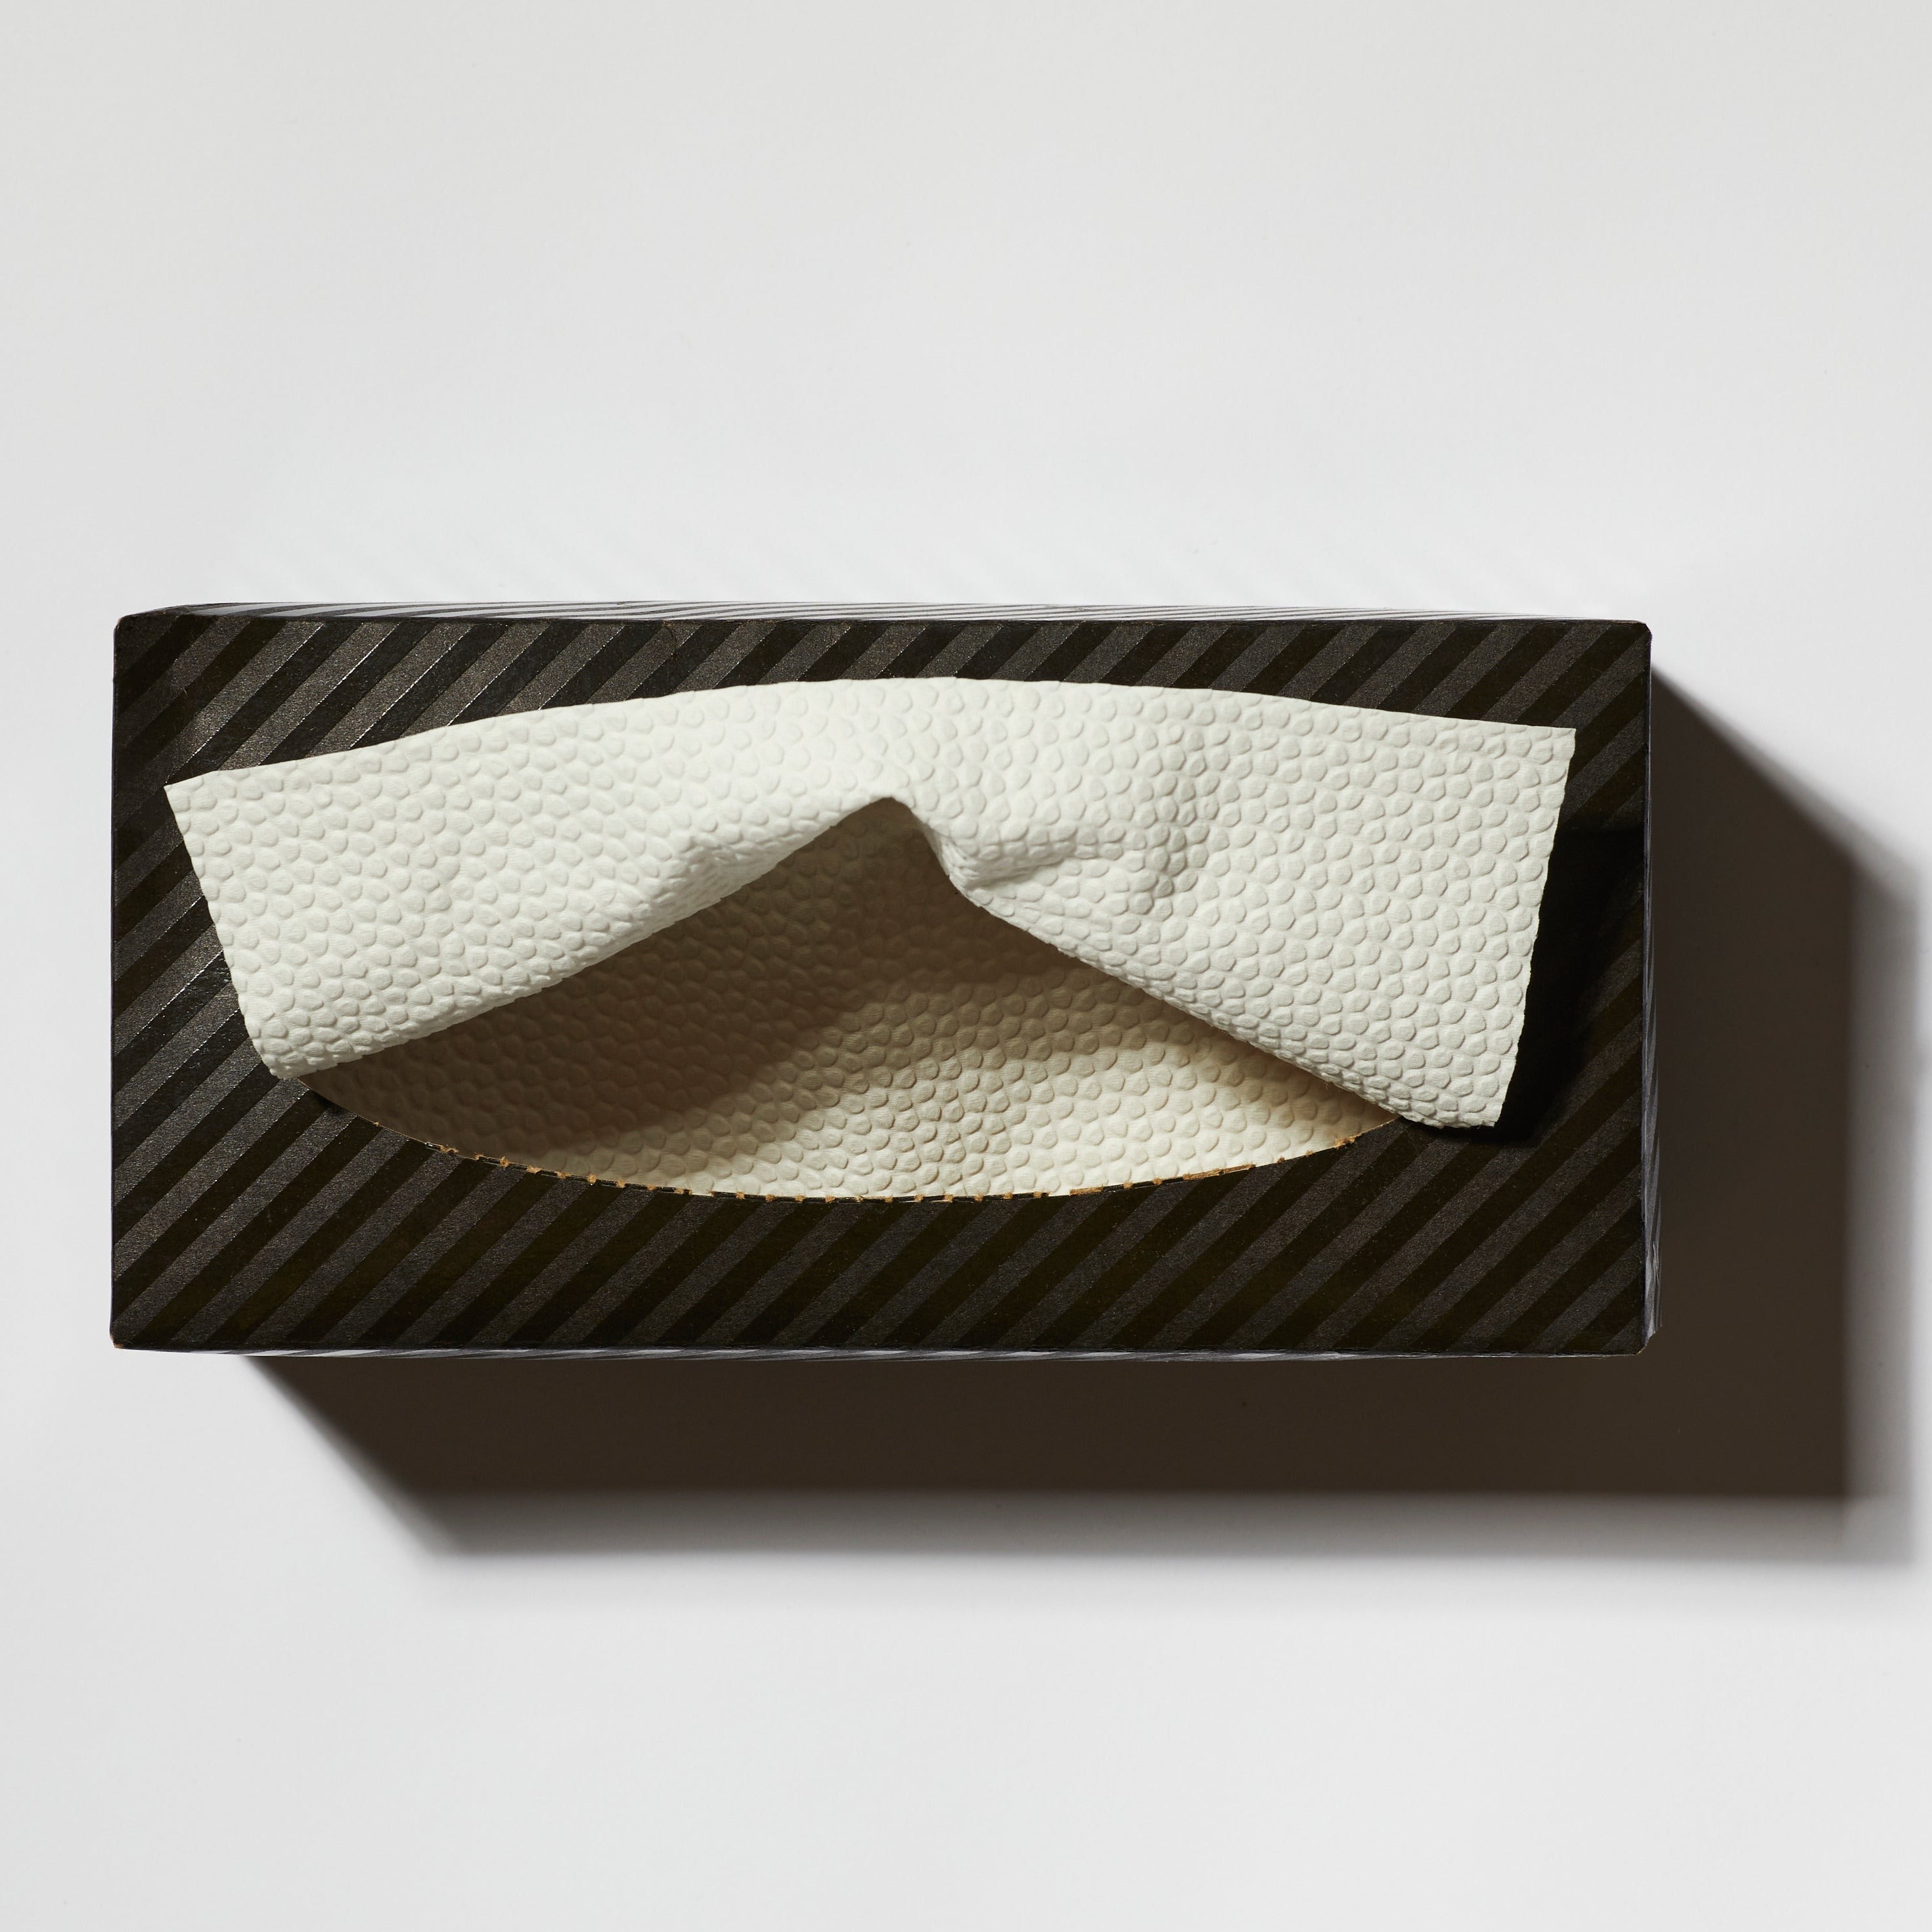 Napkin Towel Boxes - BOXES OF 6